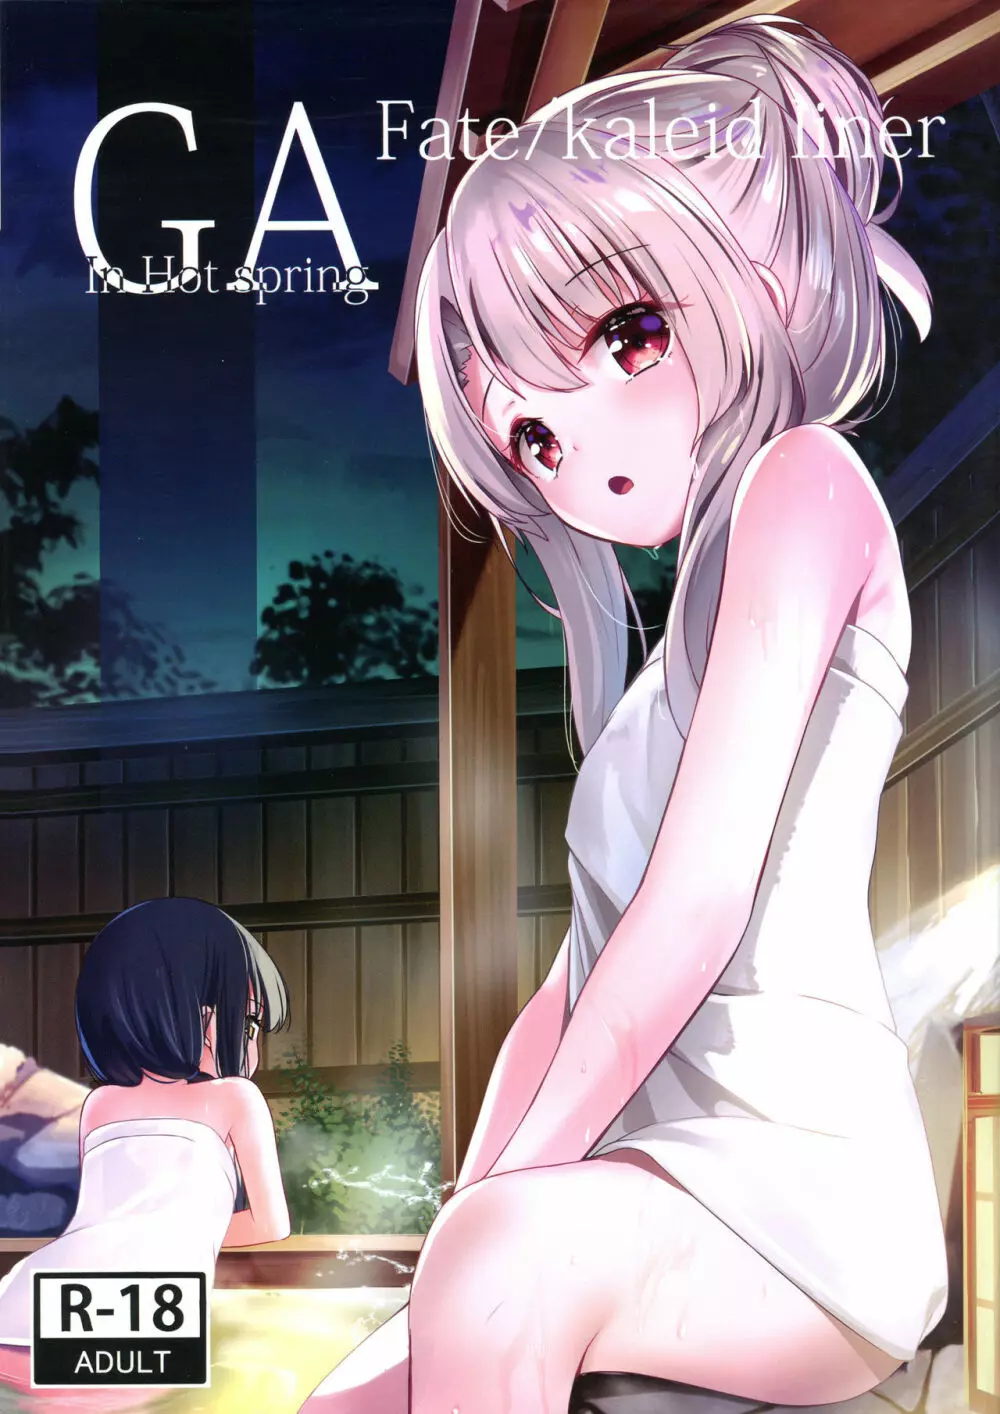 GA Fate/kaleid liner In Hot spring 1ページ